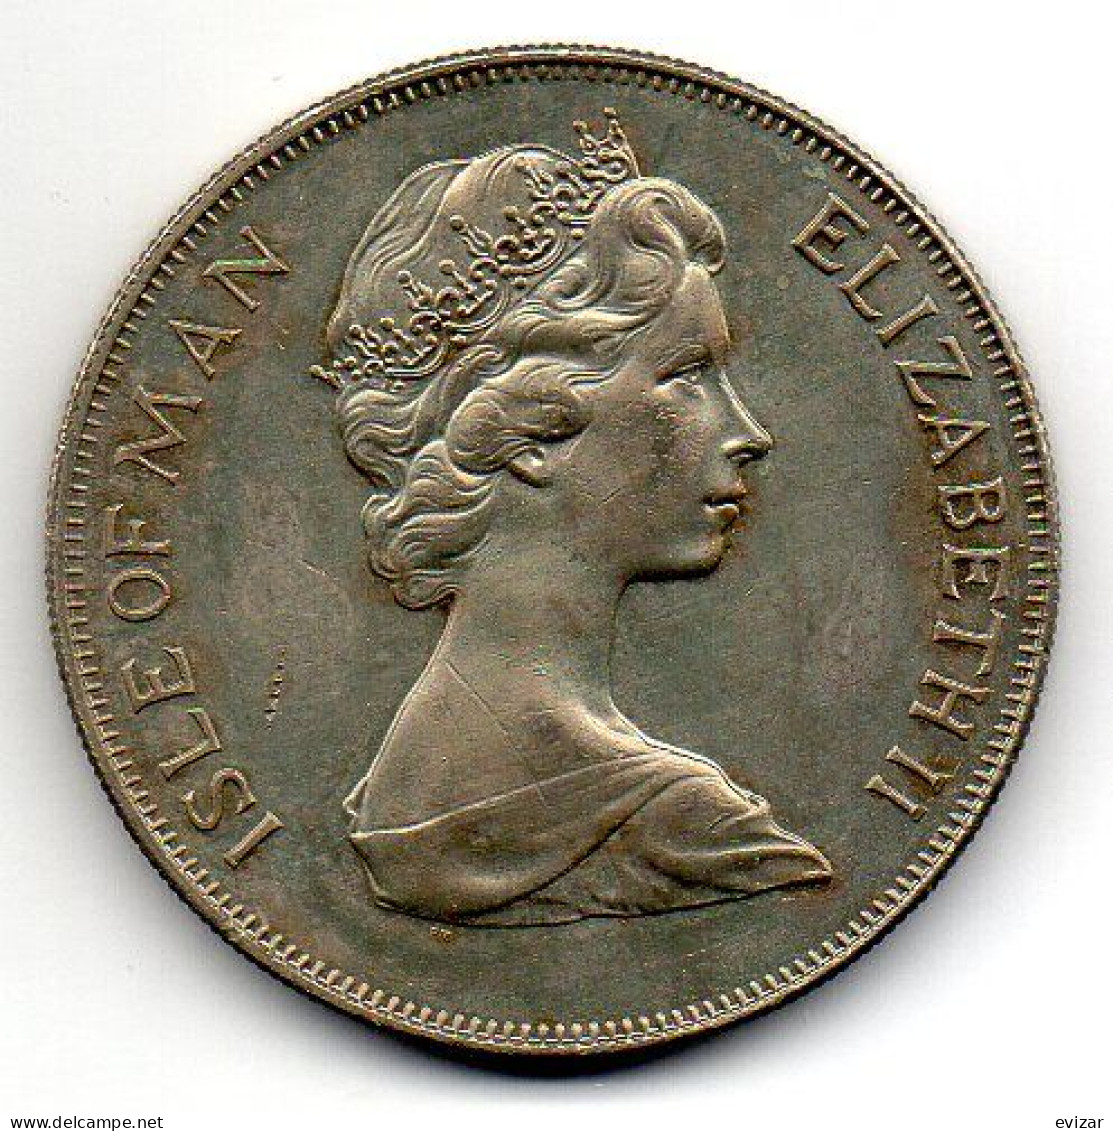 ISLE OF MAN, 25 Pence, Copper-Nickel, Year 1975, KM # 31 - Maundy Sets  & Conmemorativas